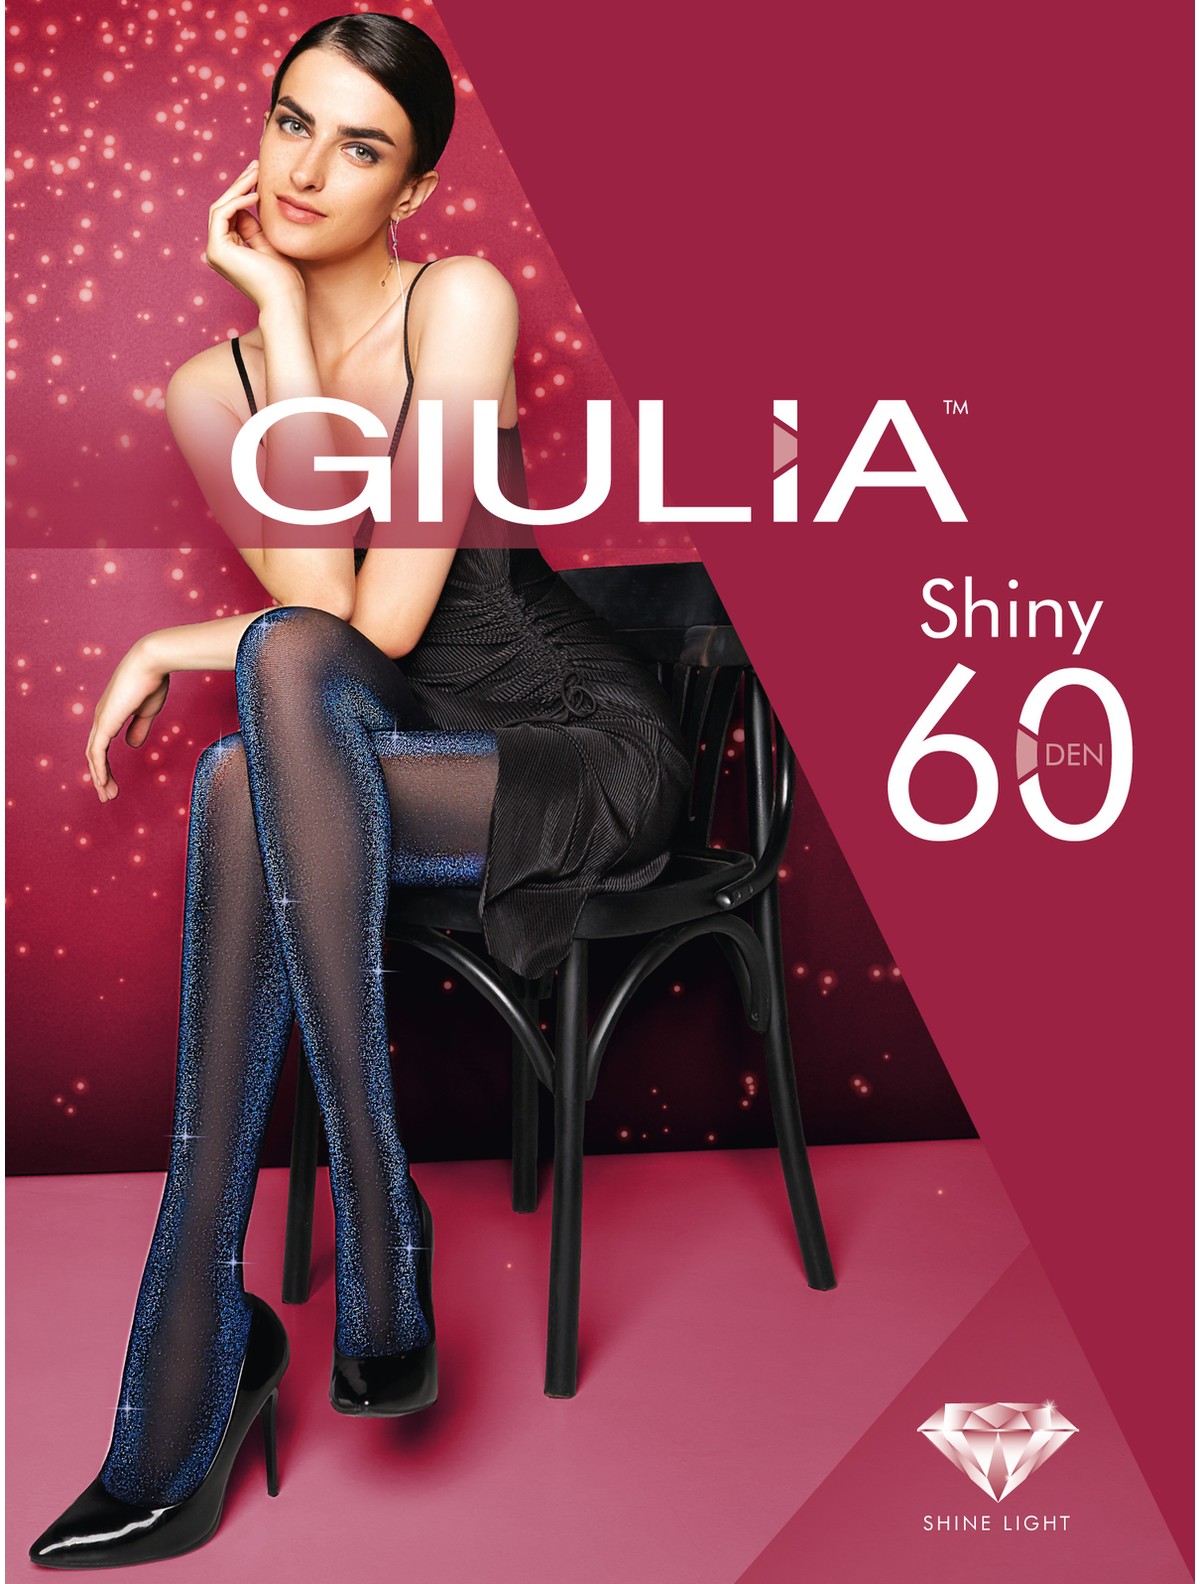 Giulia Shiny 60 Lurex tights Shiny PINK Lurex